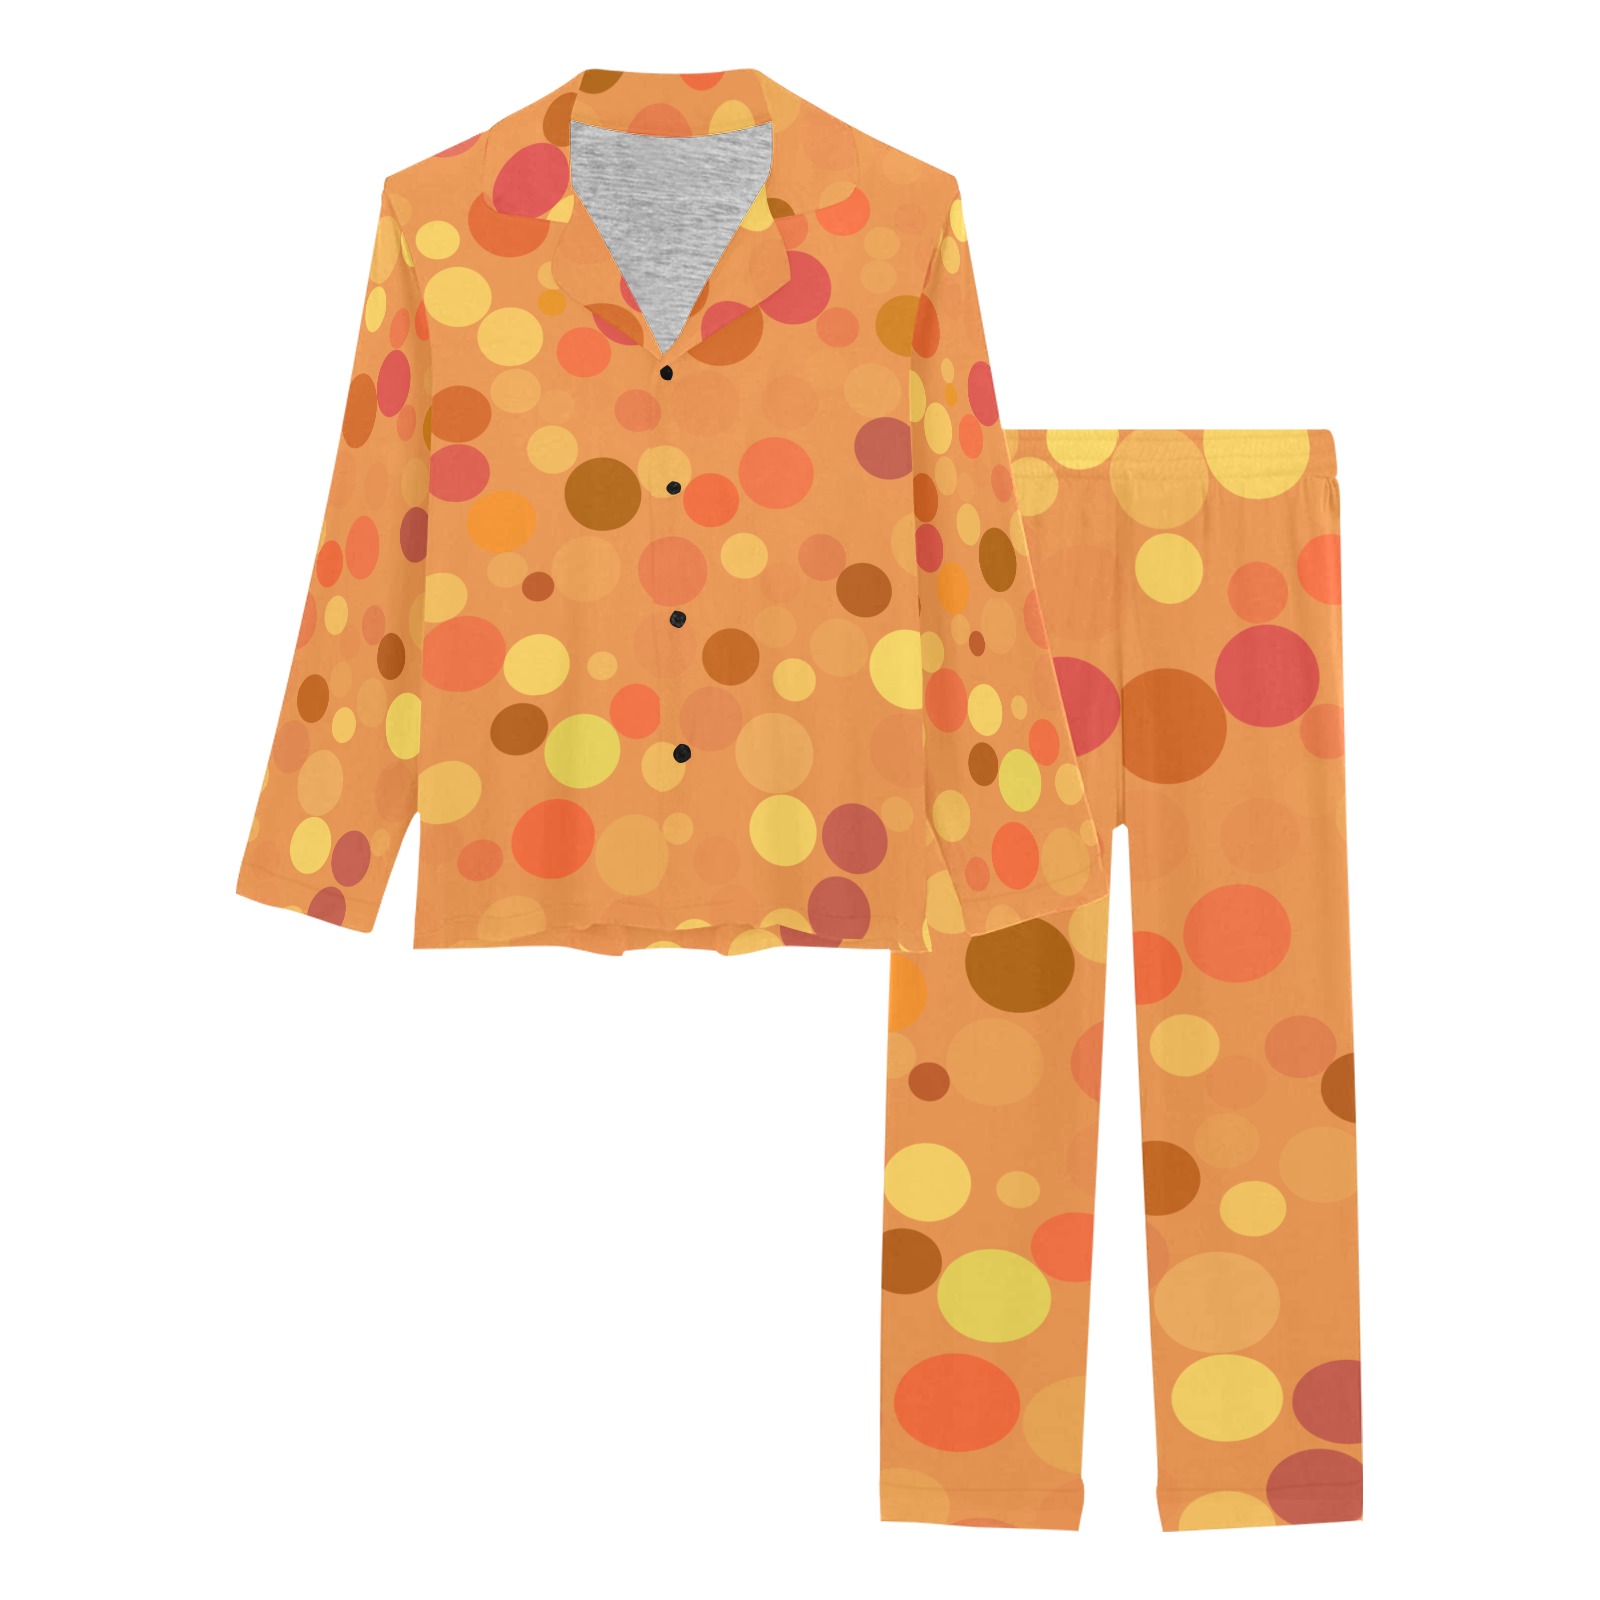 Yellow and Orange Polka Dots Women's Long Pajama Set